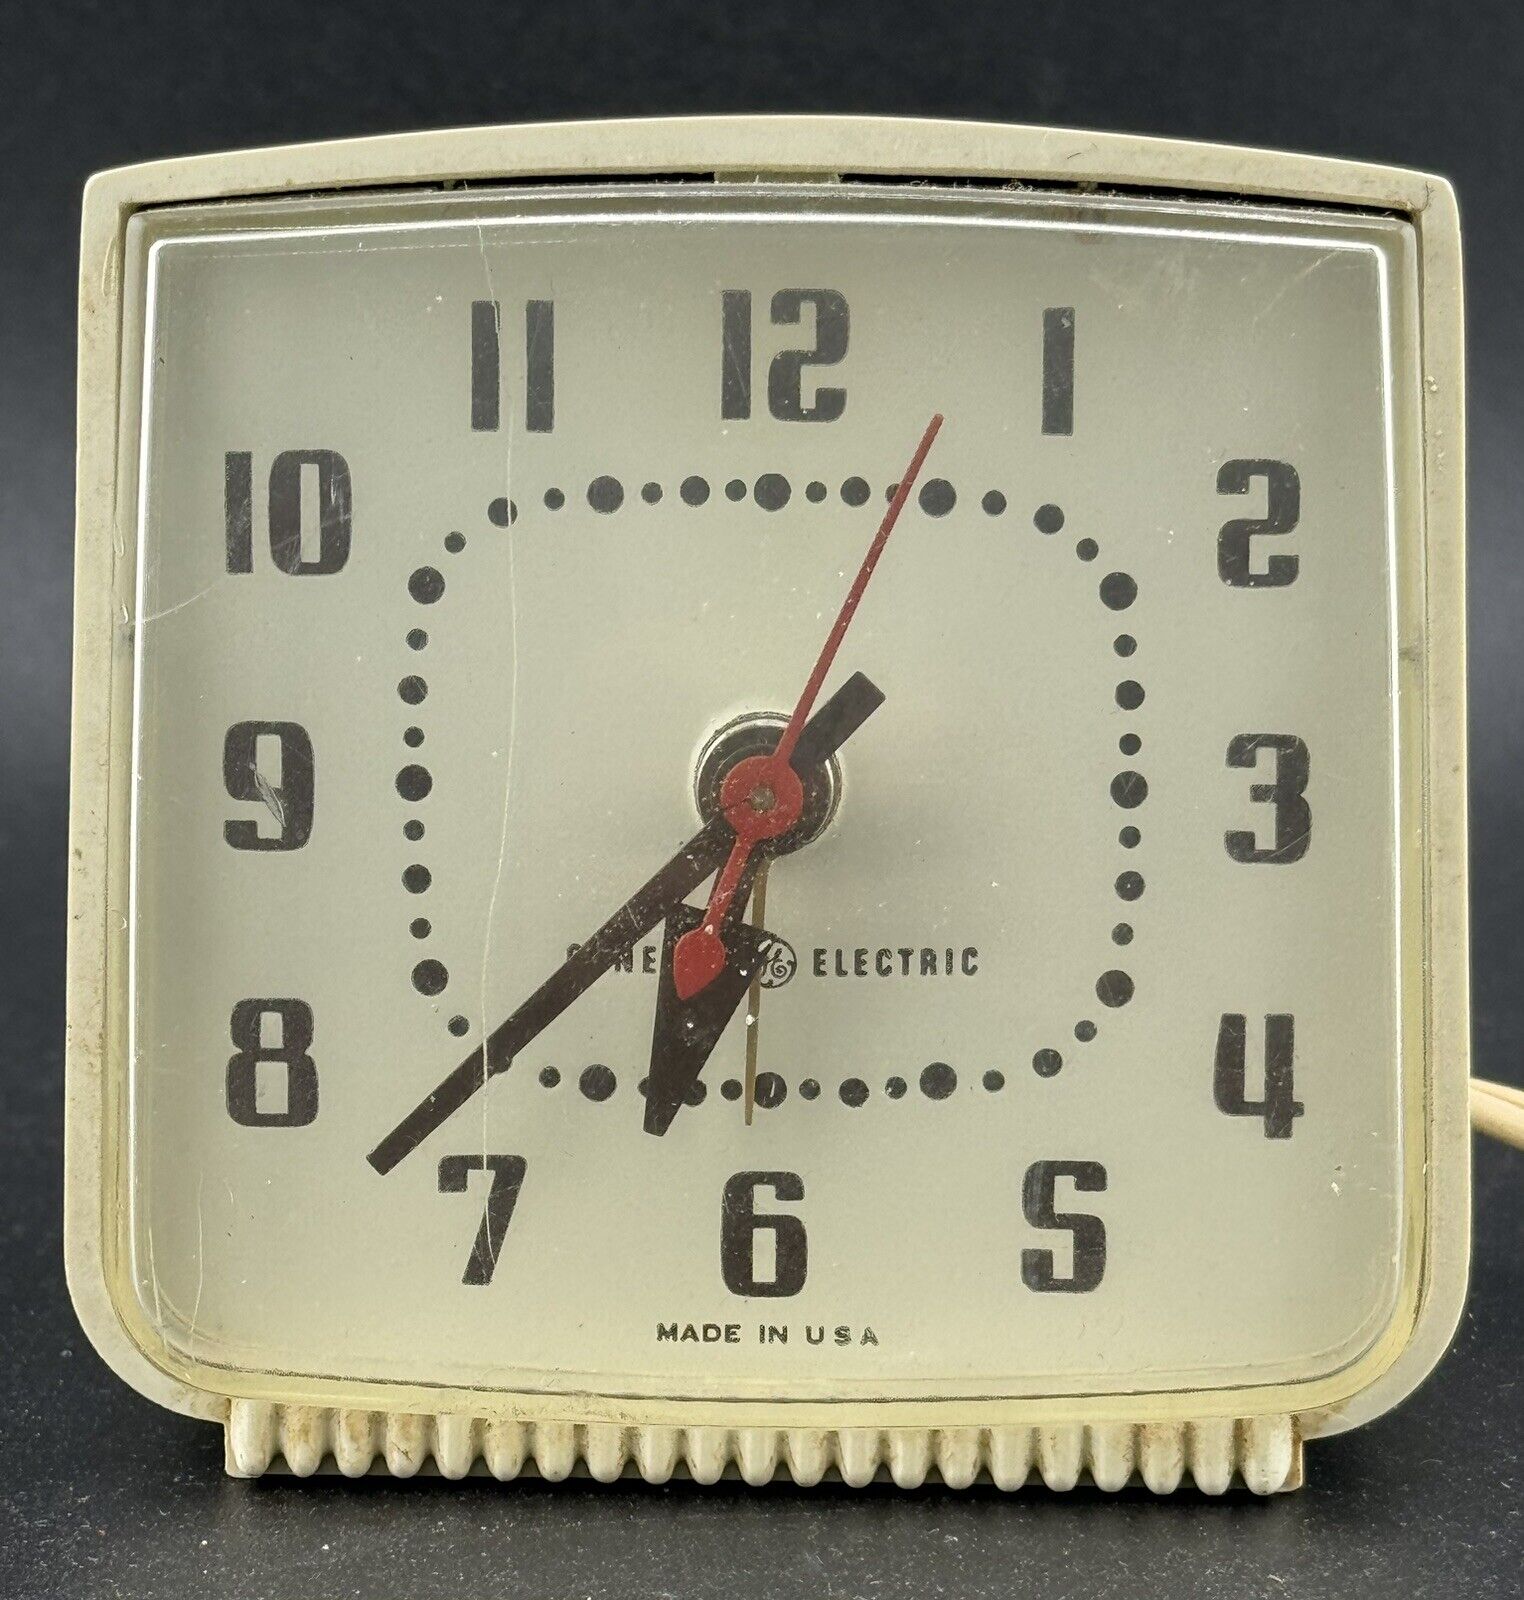 Vintage GE Electric Corded Alarm Clock Tested Working Vintage USA Made